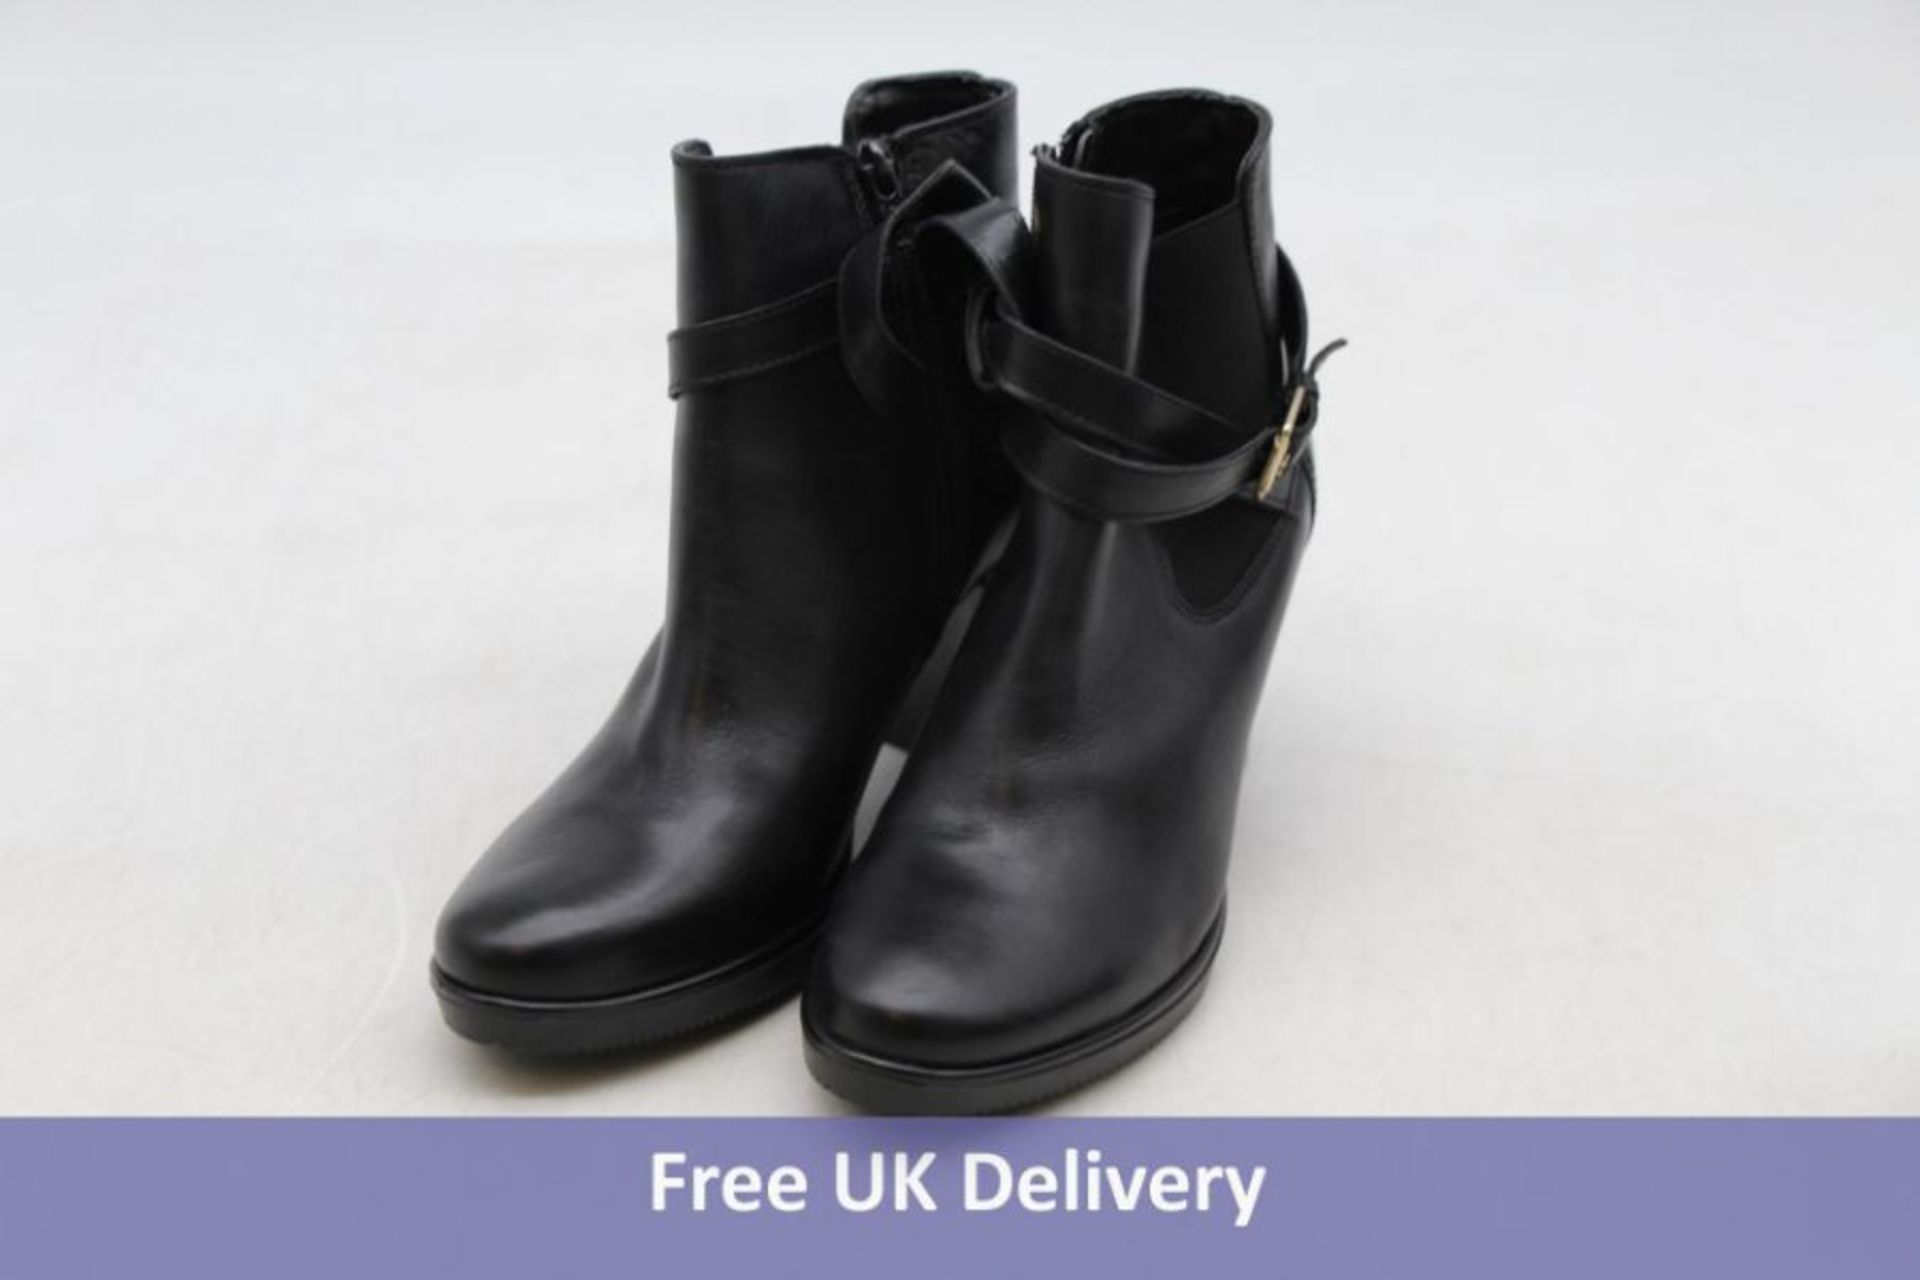 Carvela Women's Boots, Black, Size 38, No box